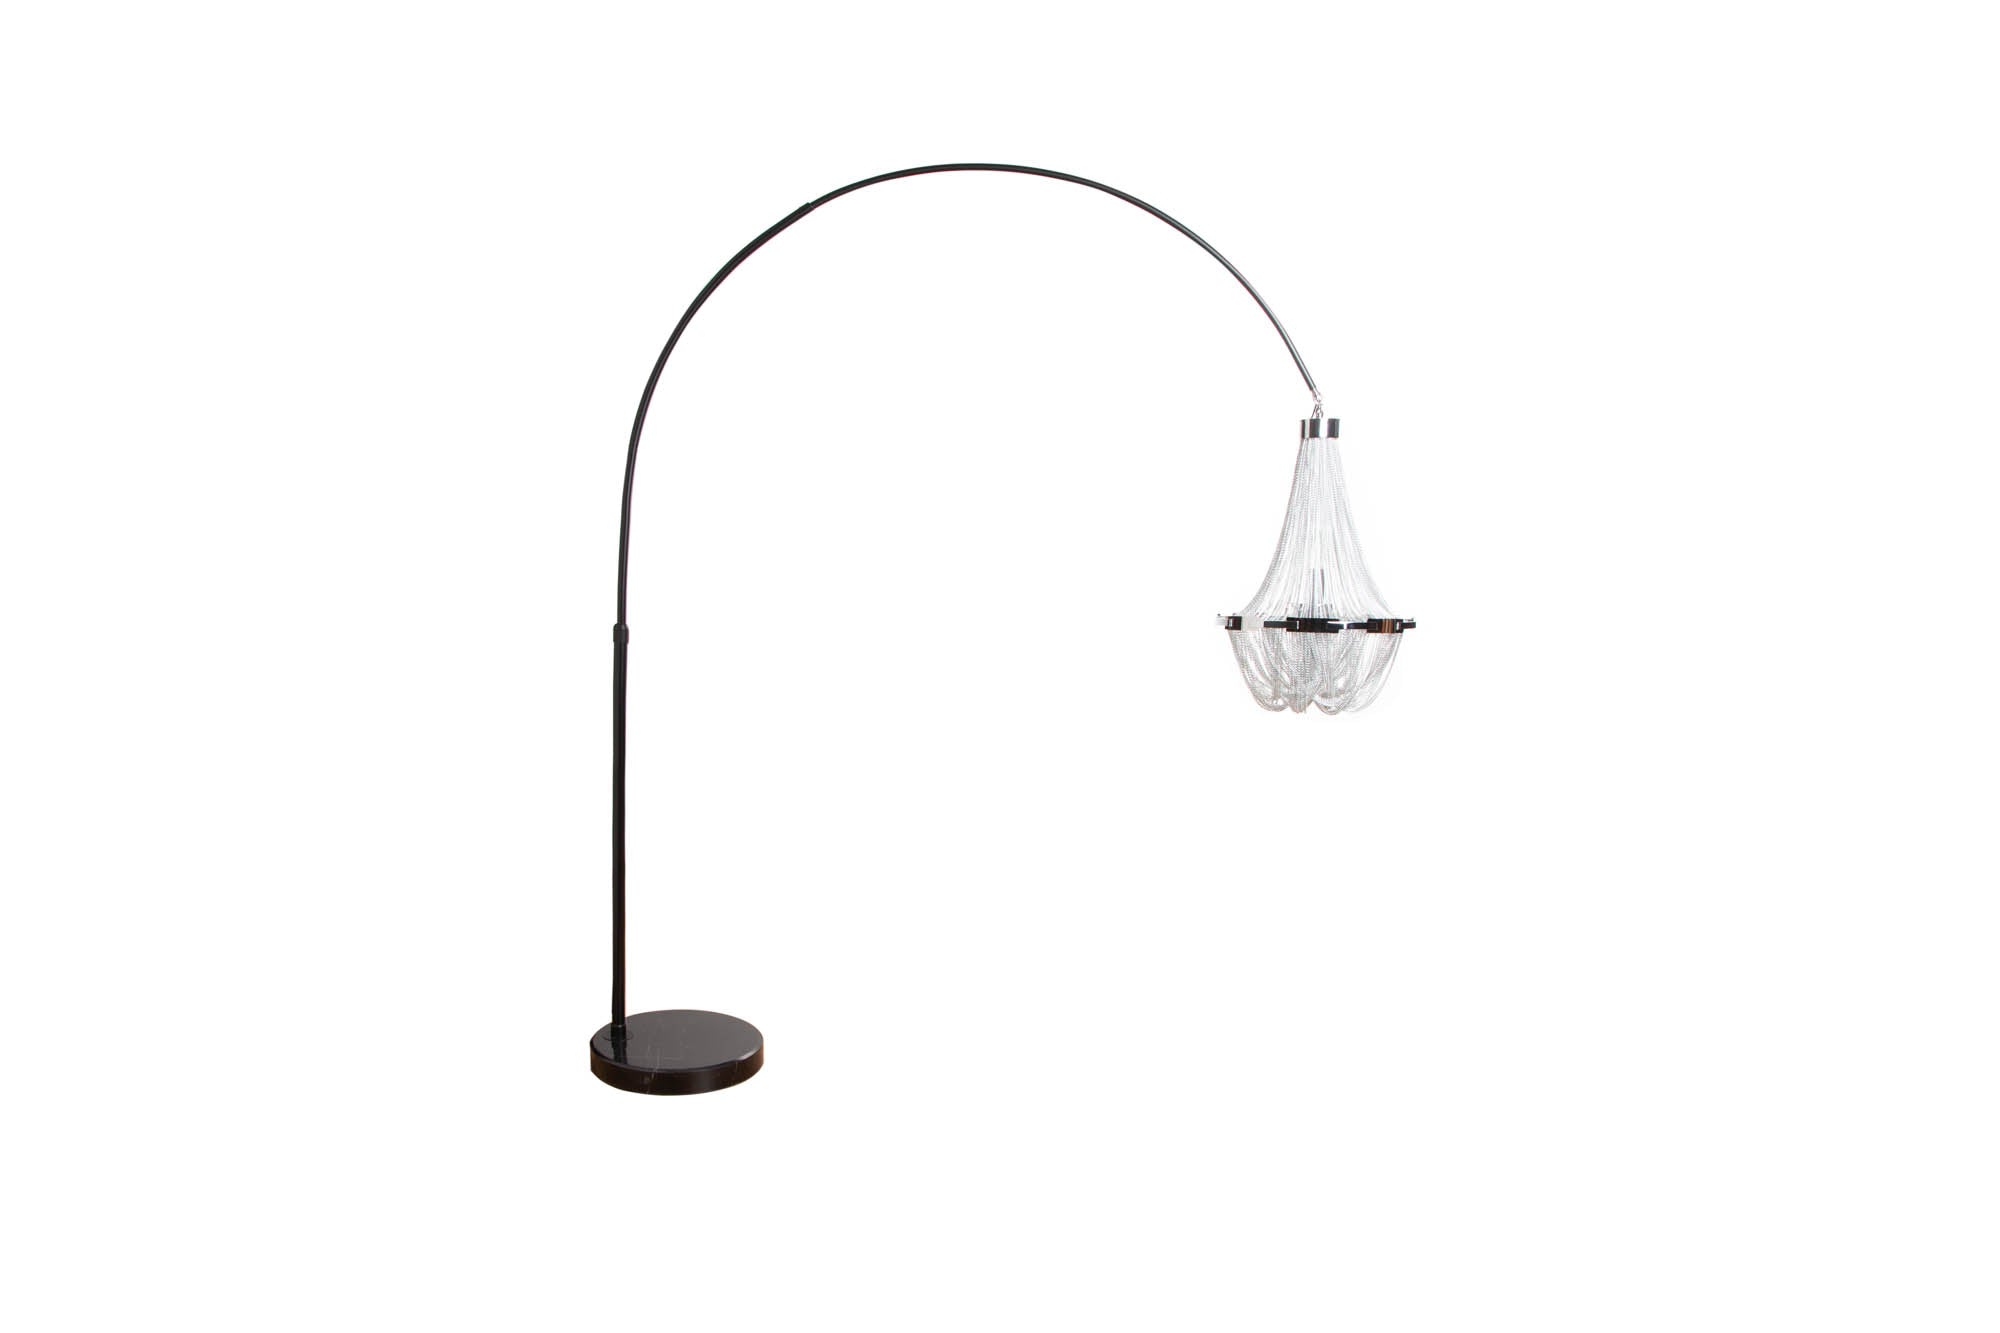 Floor Lamp Royal 189-204cm Silver